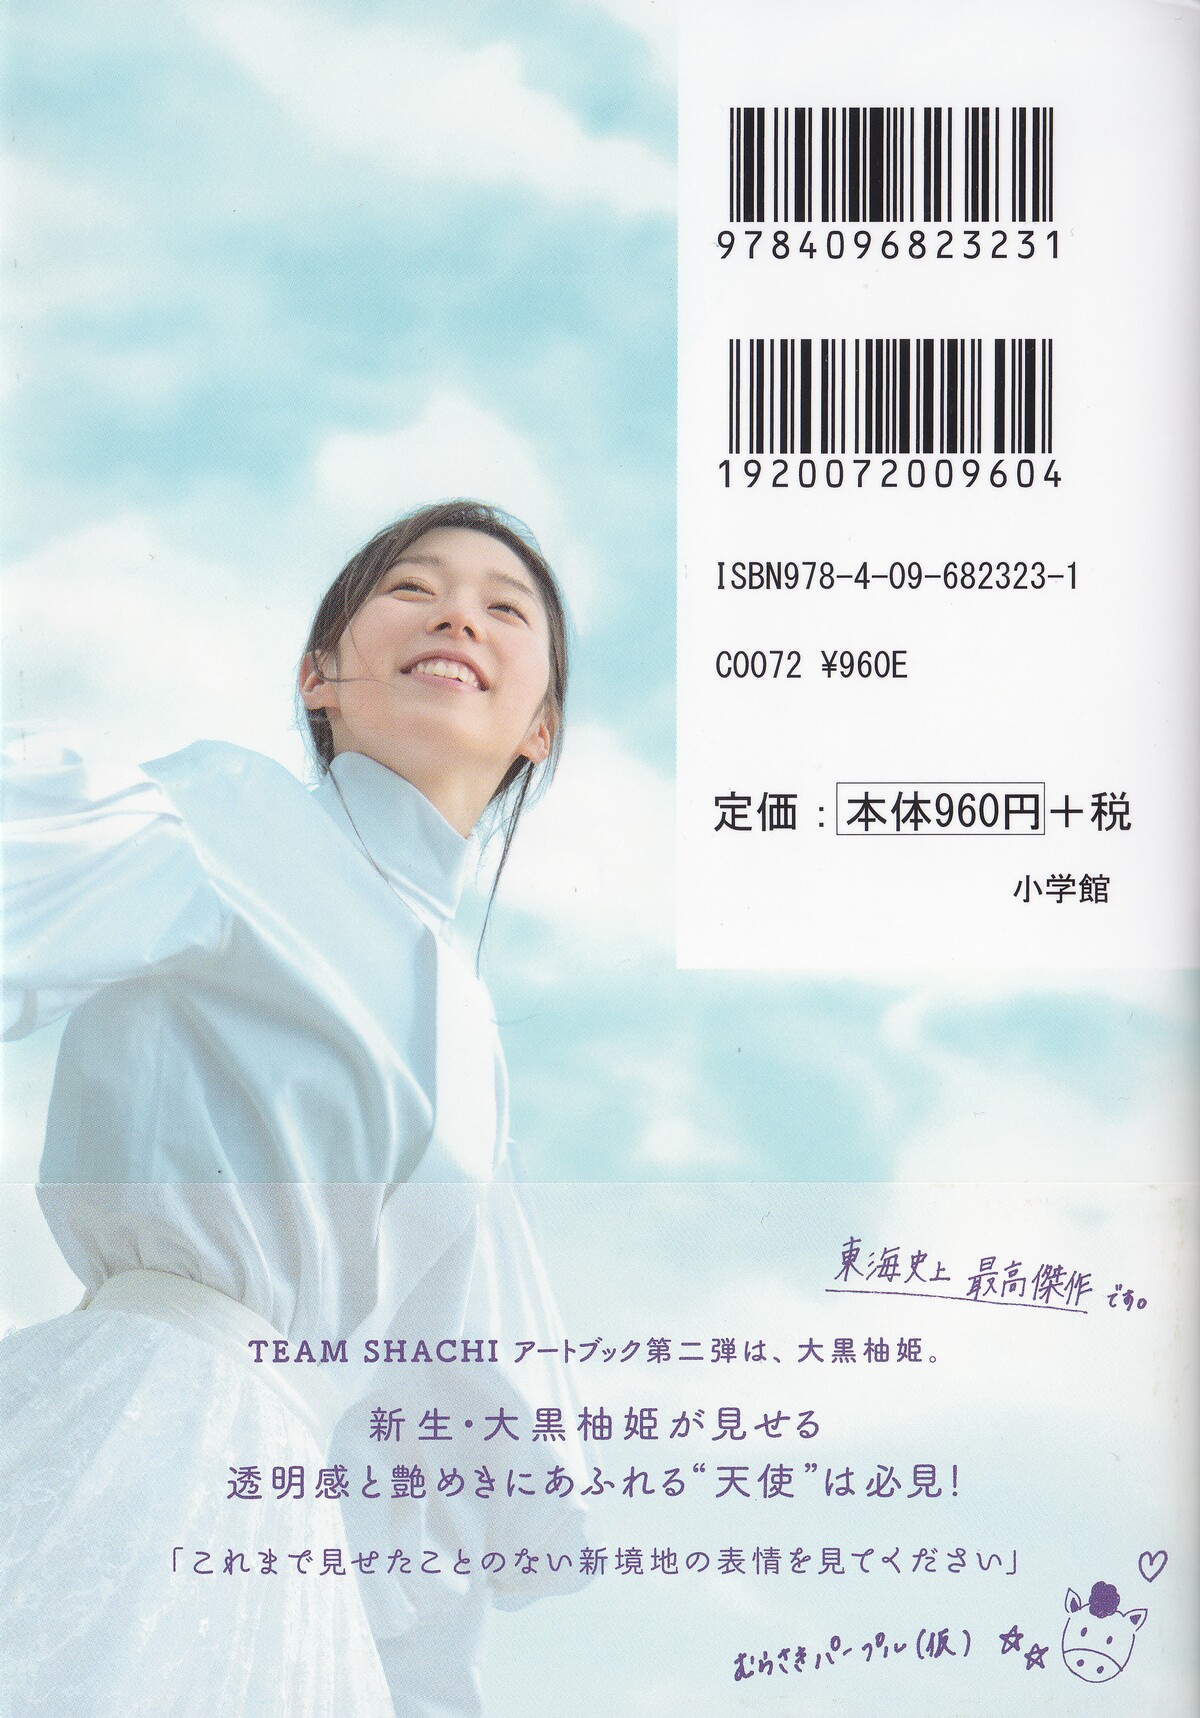 Photobook 2020 03 11 Team Shachi Art Book Collection Vol 2 0003 0054426796.jpg